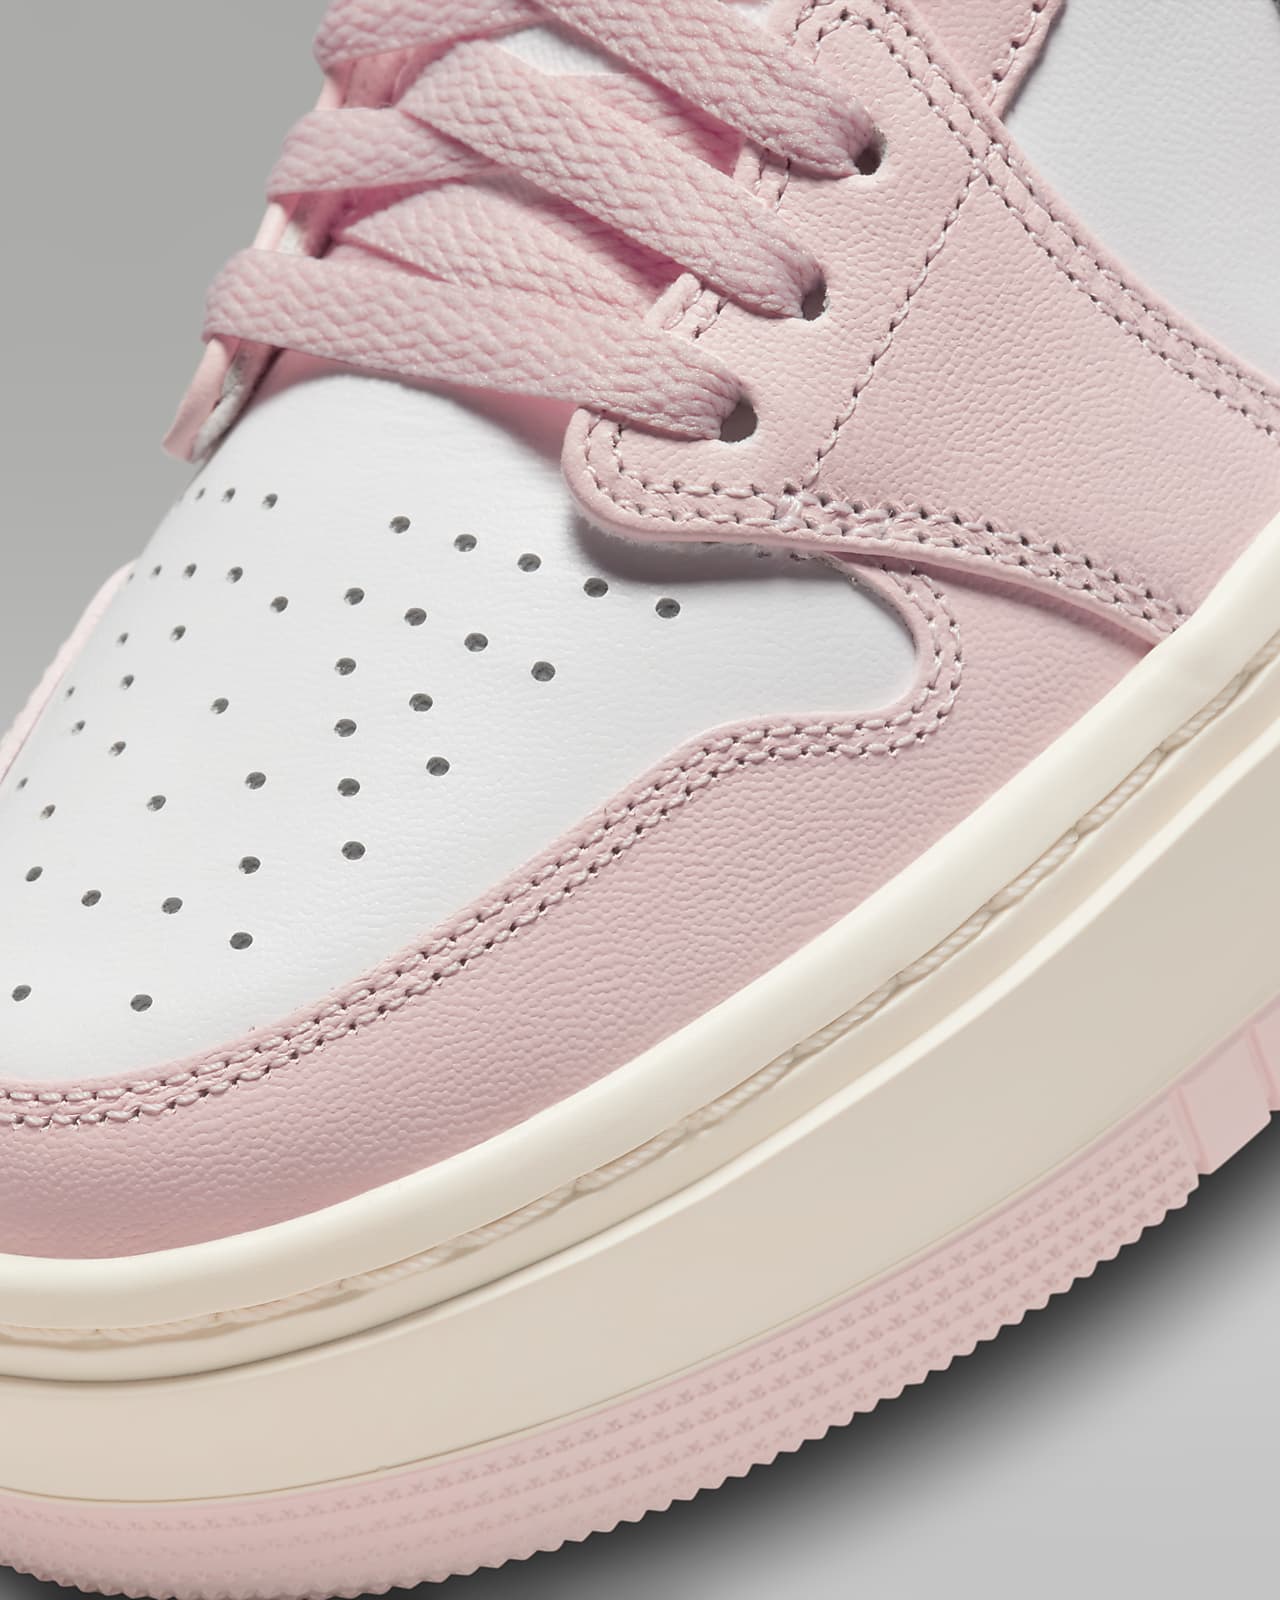 Nike WMNS Air Jordan Elevate Soft Pink